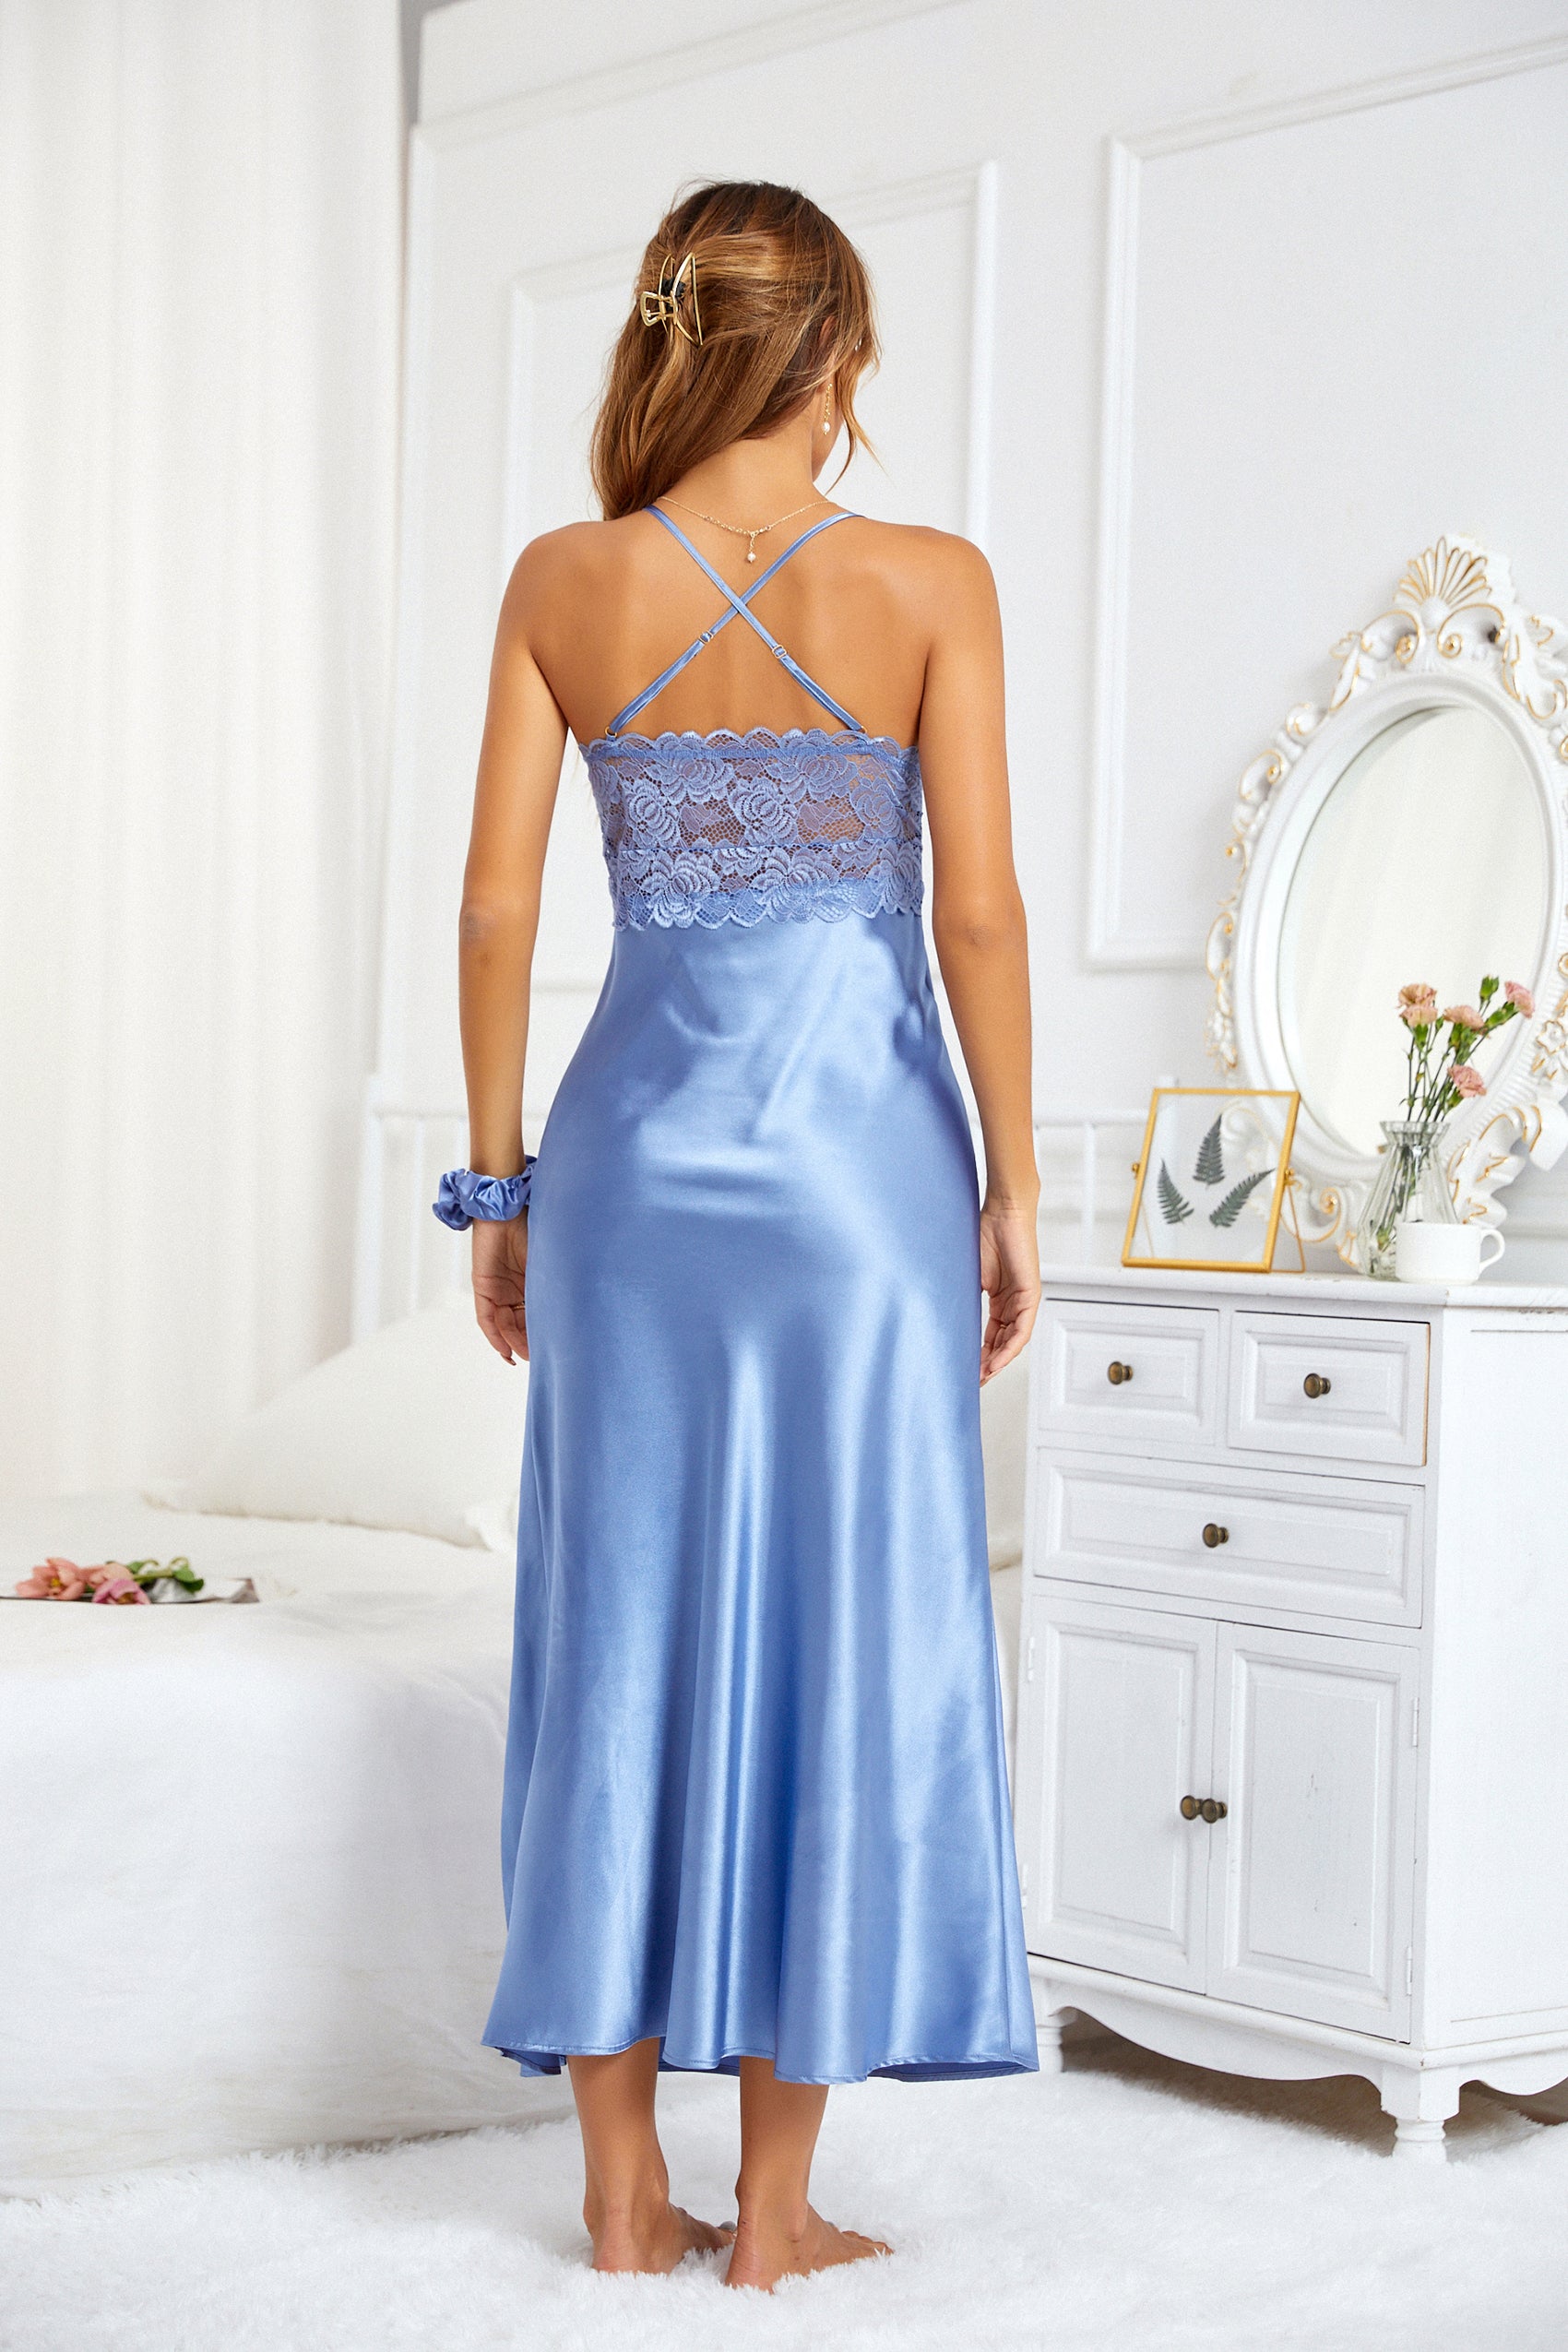 Sexy V-neck Nightgown Lace Lingerie Chemises Sleeveless Sleep Dress For Women Elegant Midnight